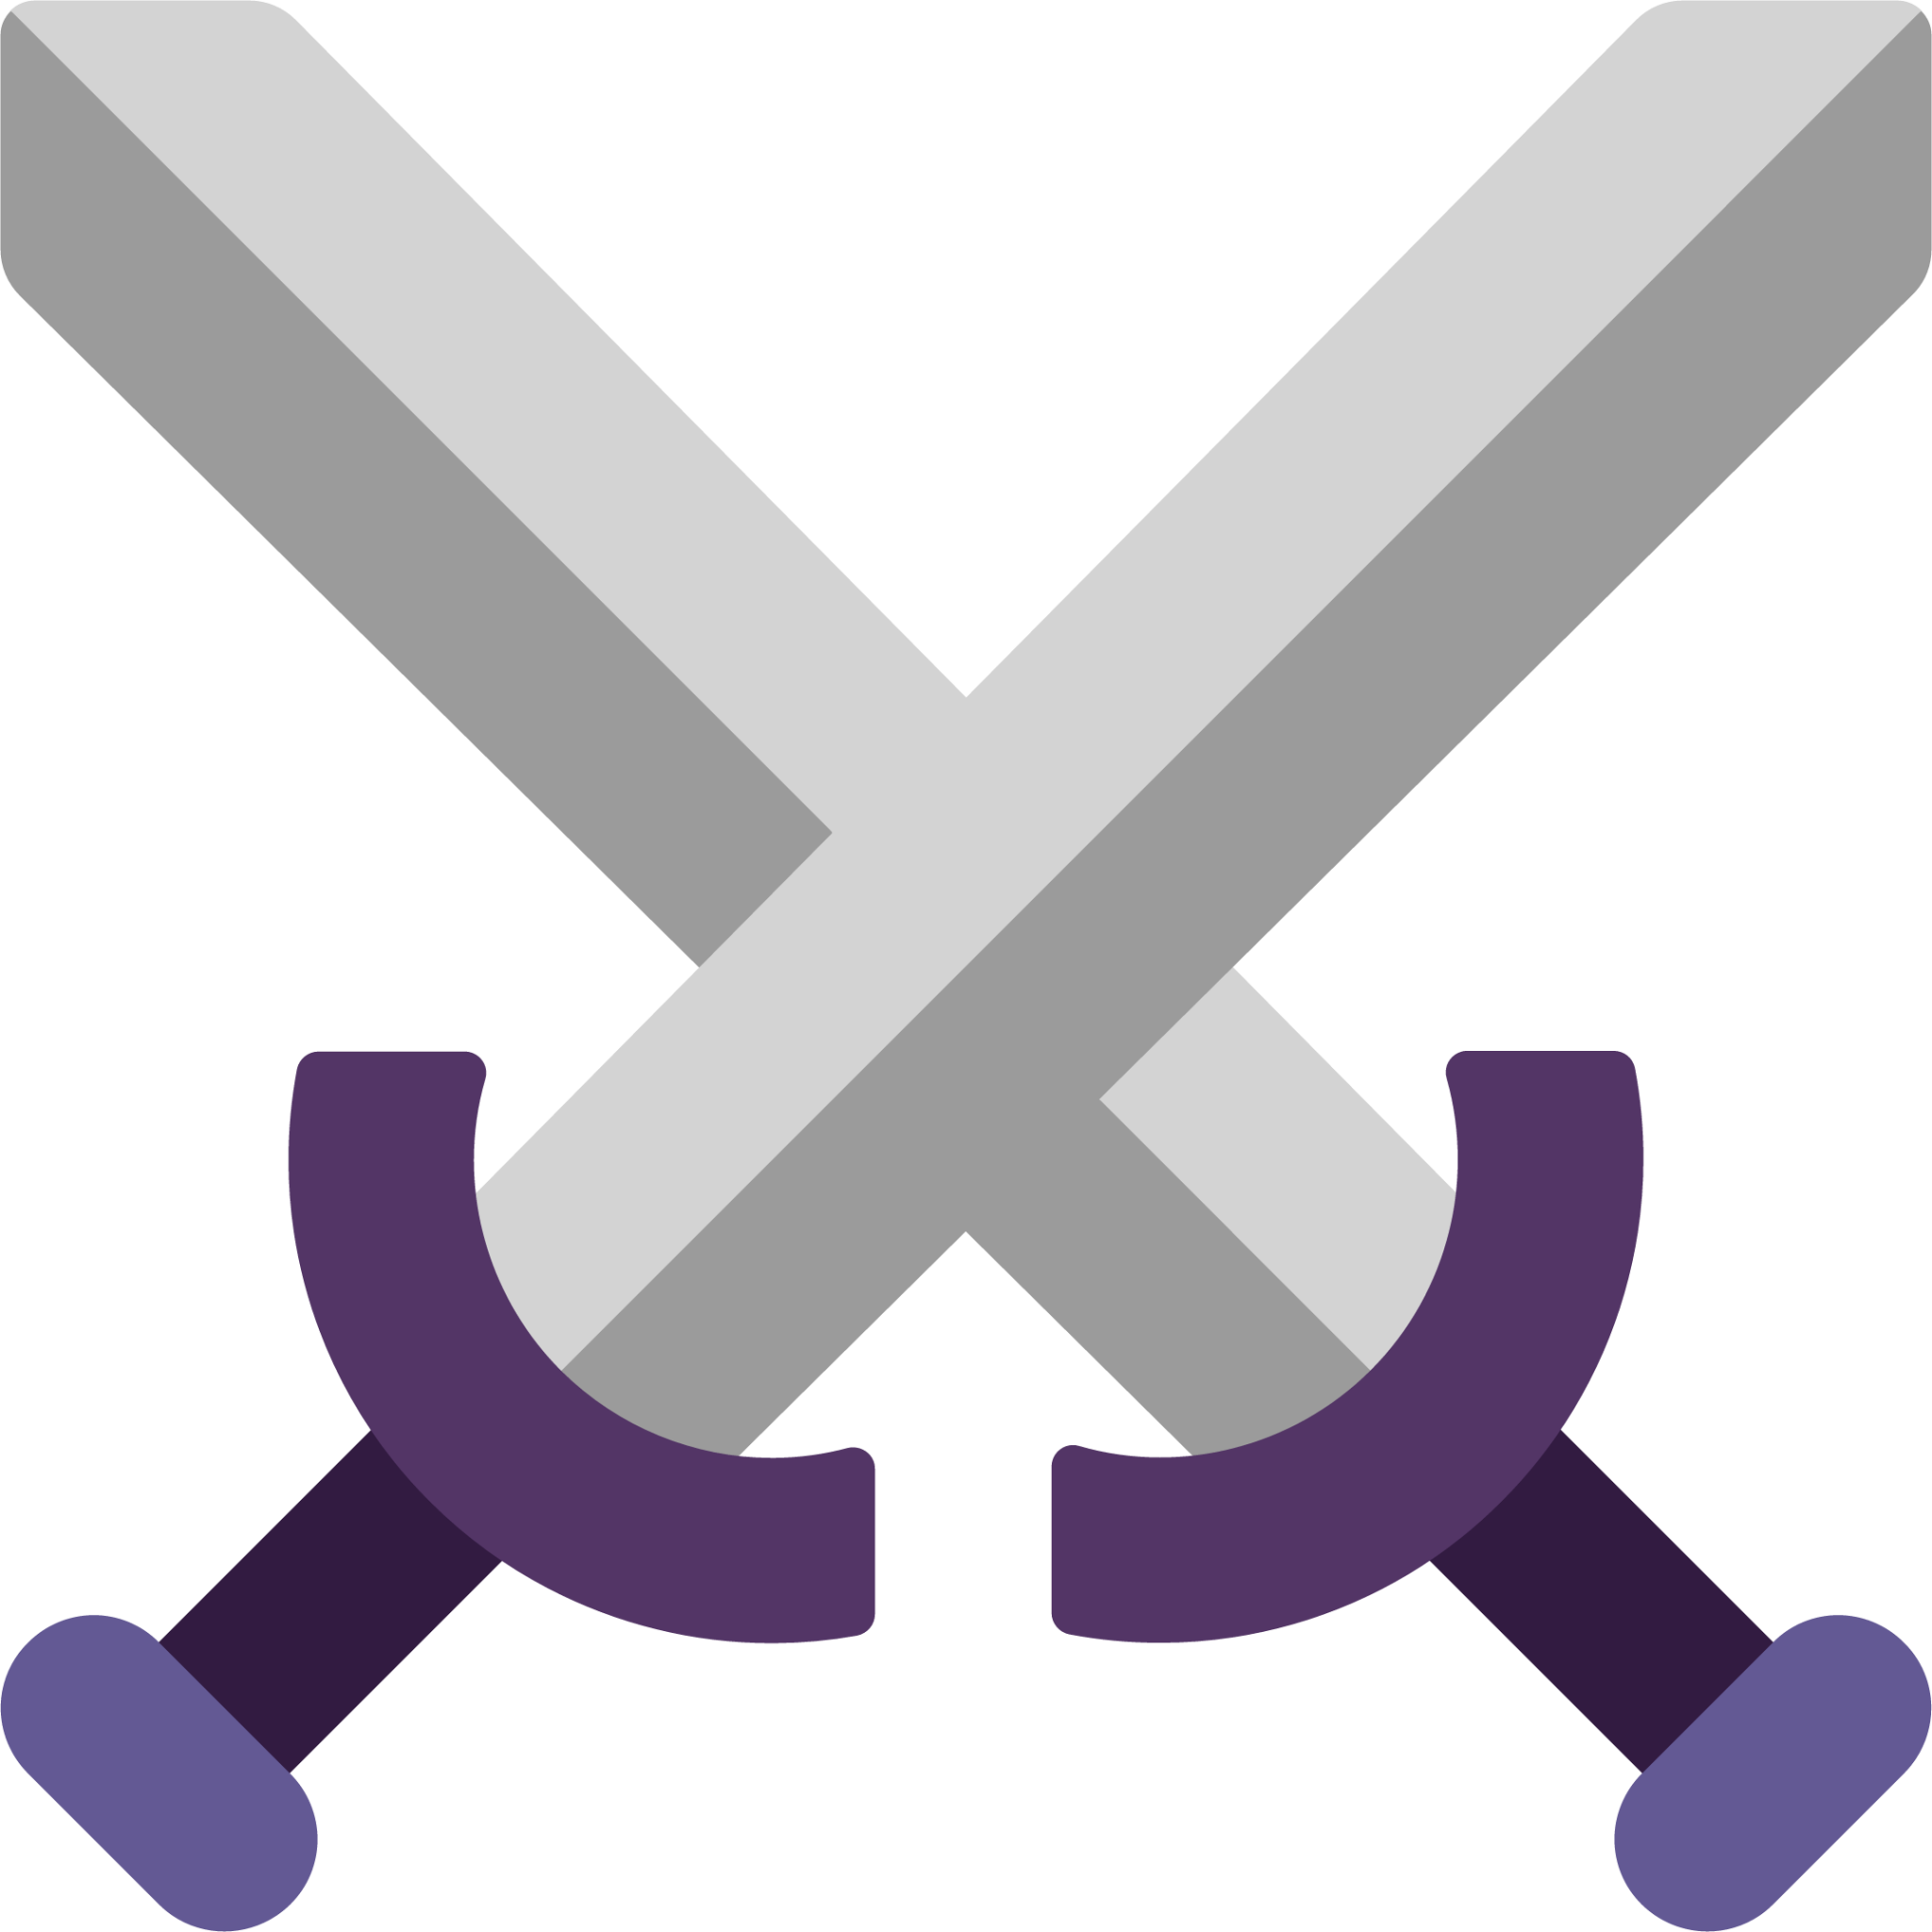 Crossed minecraft swords